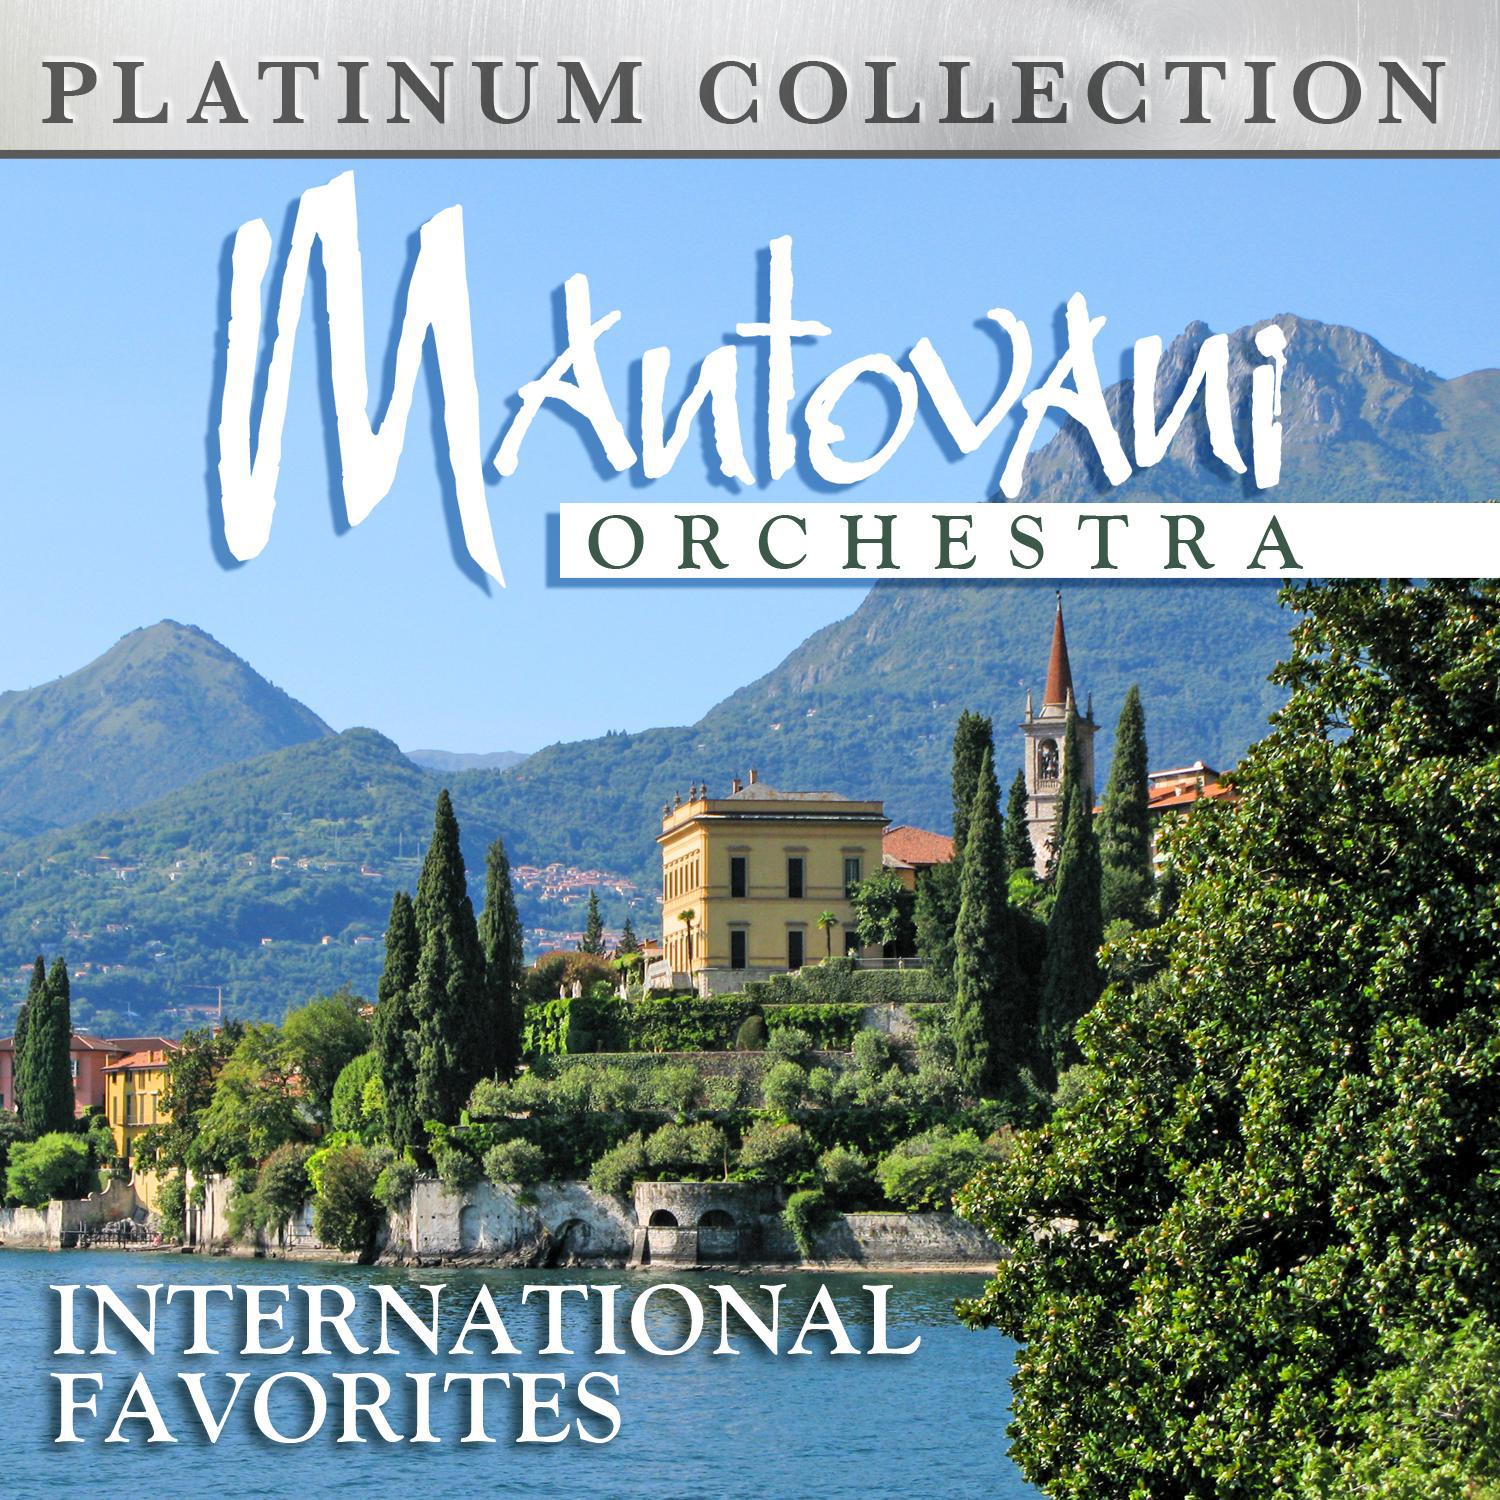 Mantovani Orchestra - International Favorites